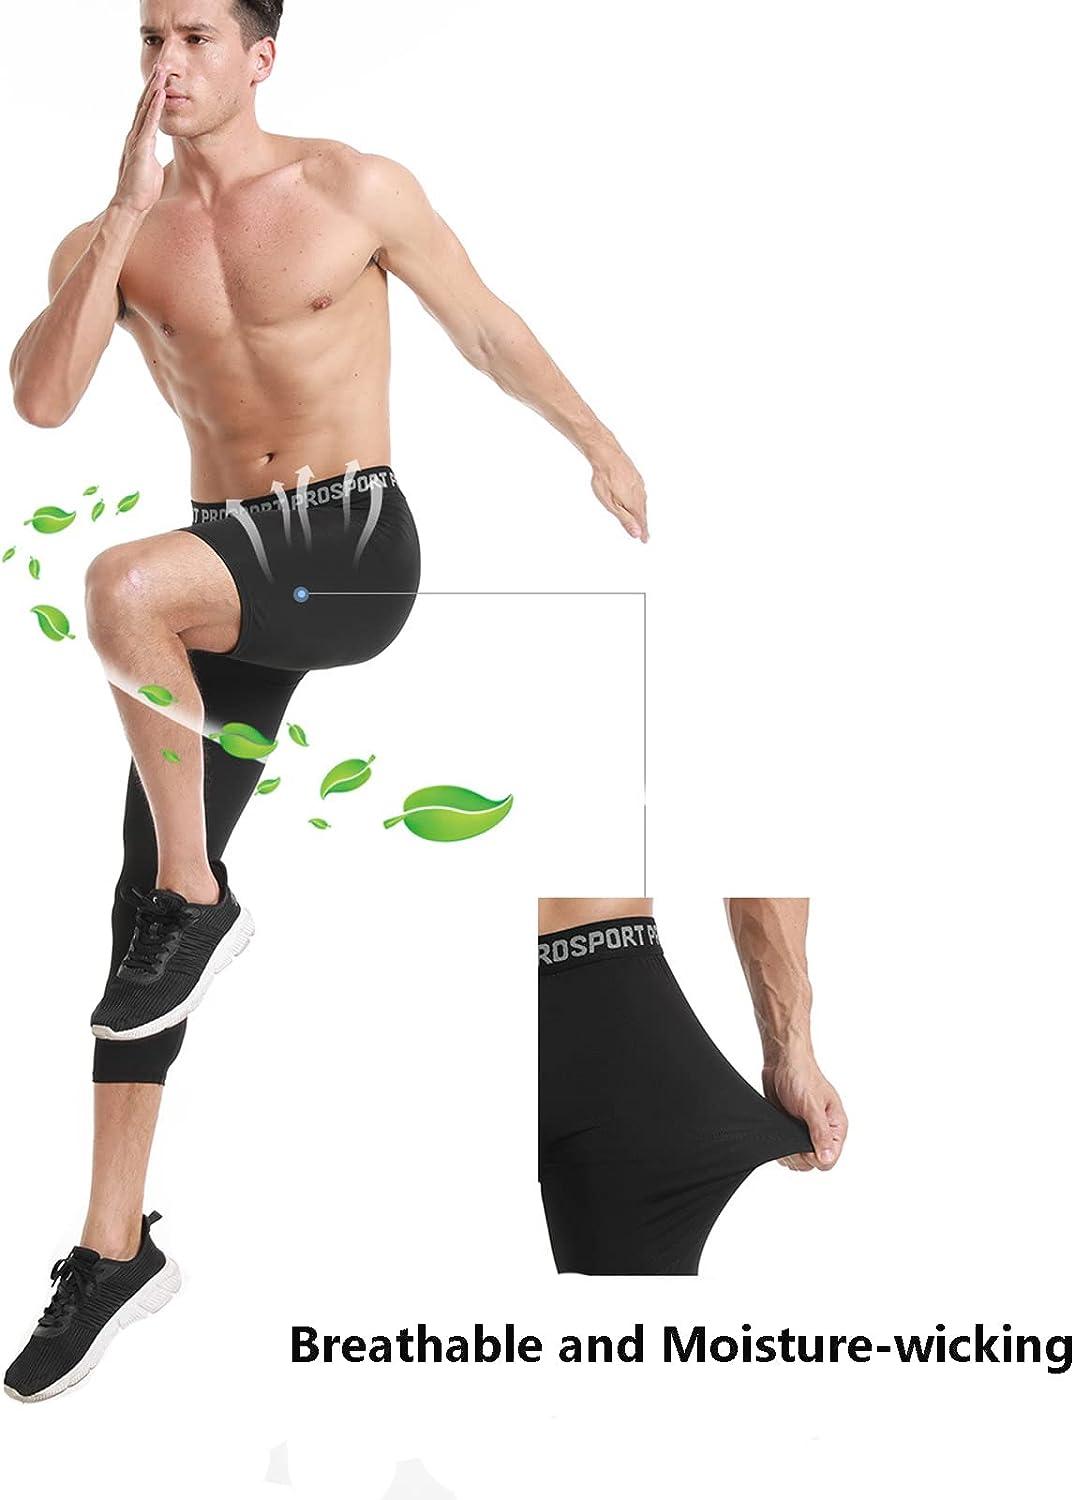 Men One Leg Compression 3/4 Capri Tights Pants Athletic Basketball Base  Layer